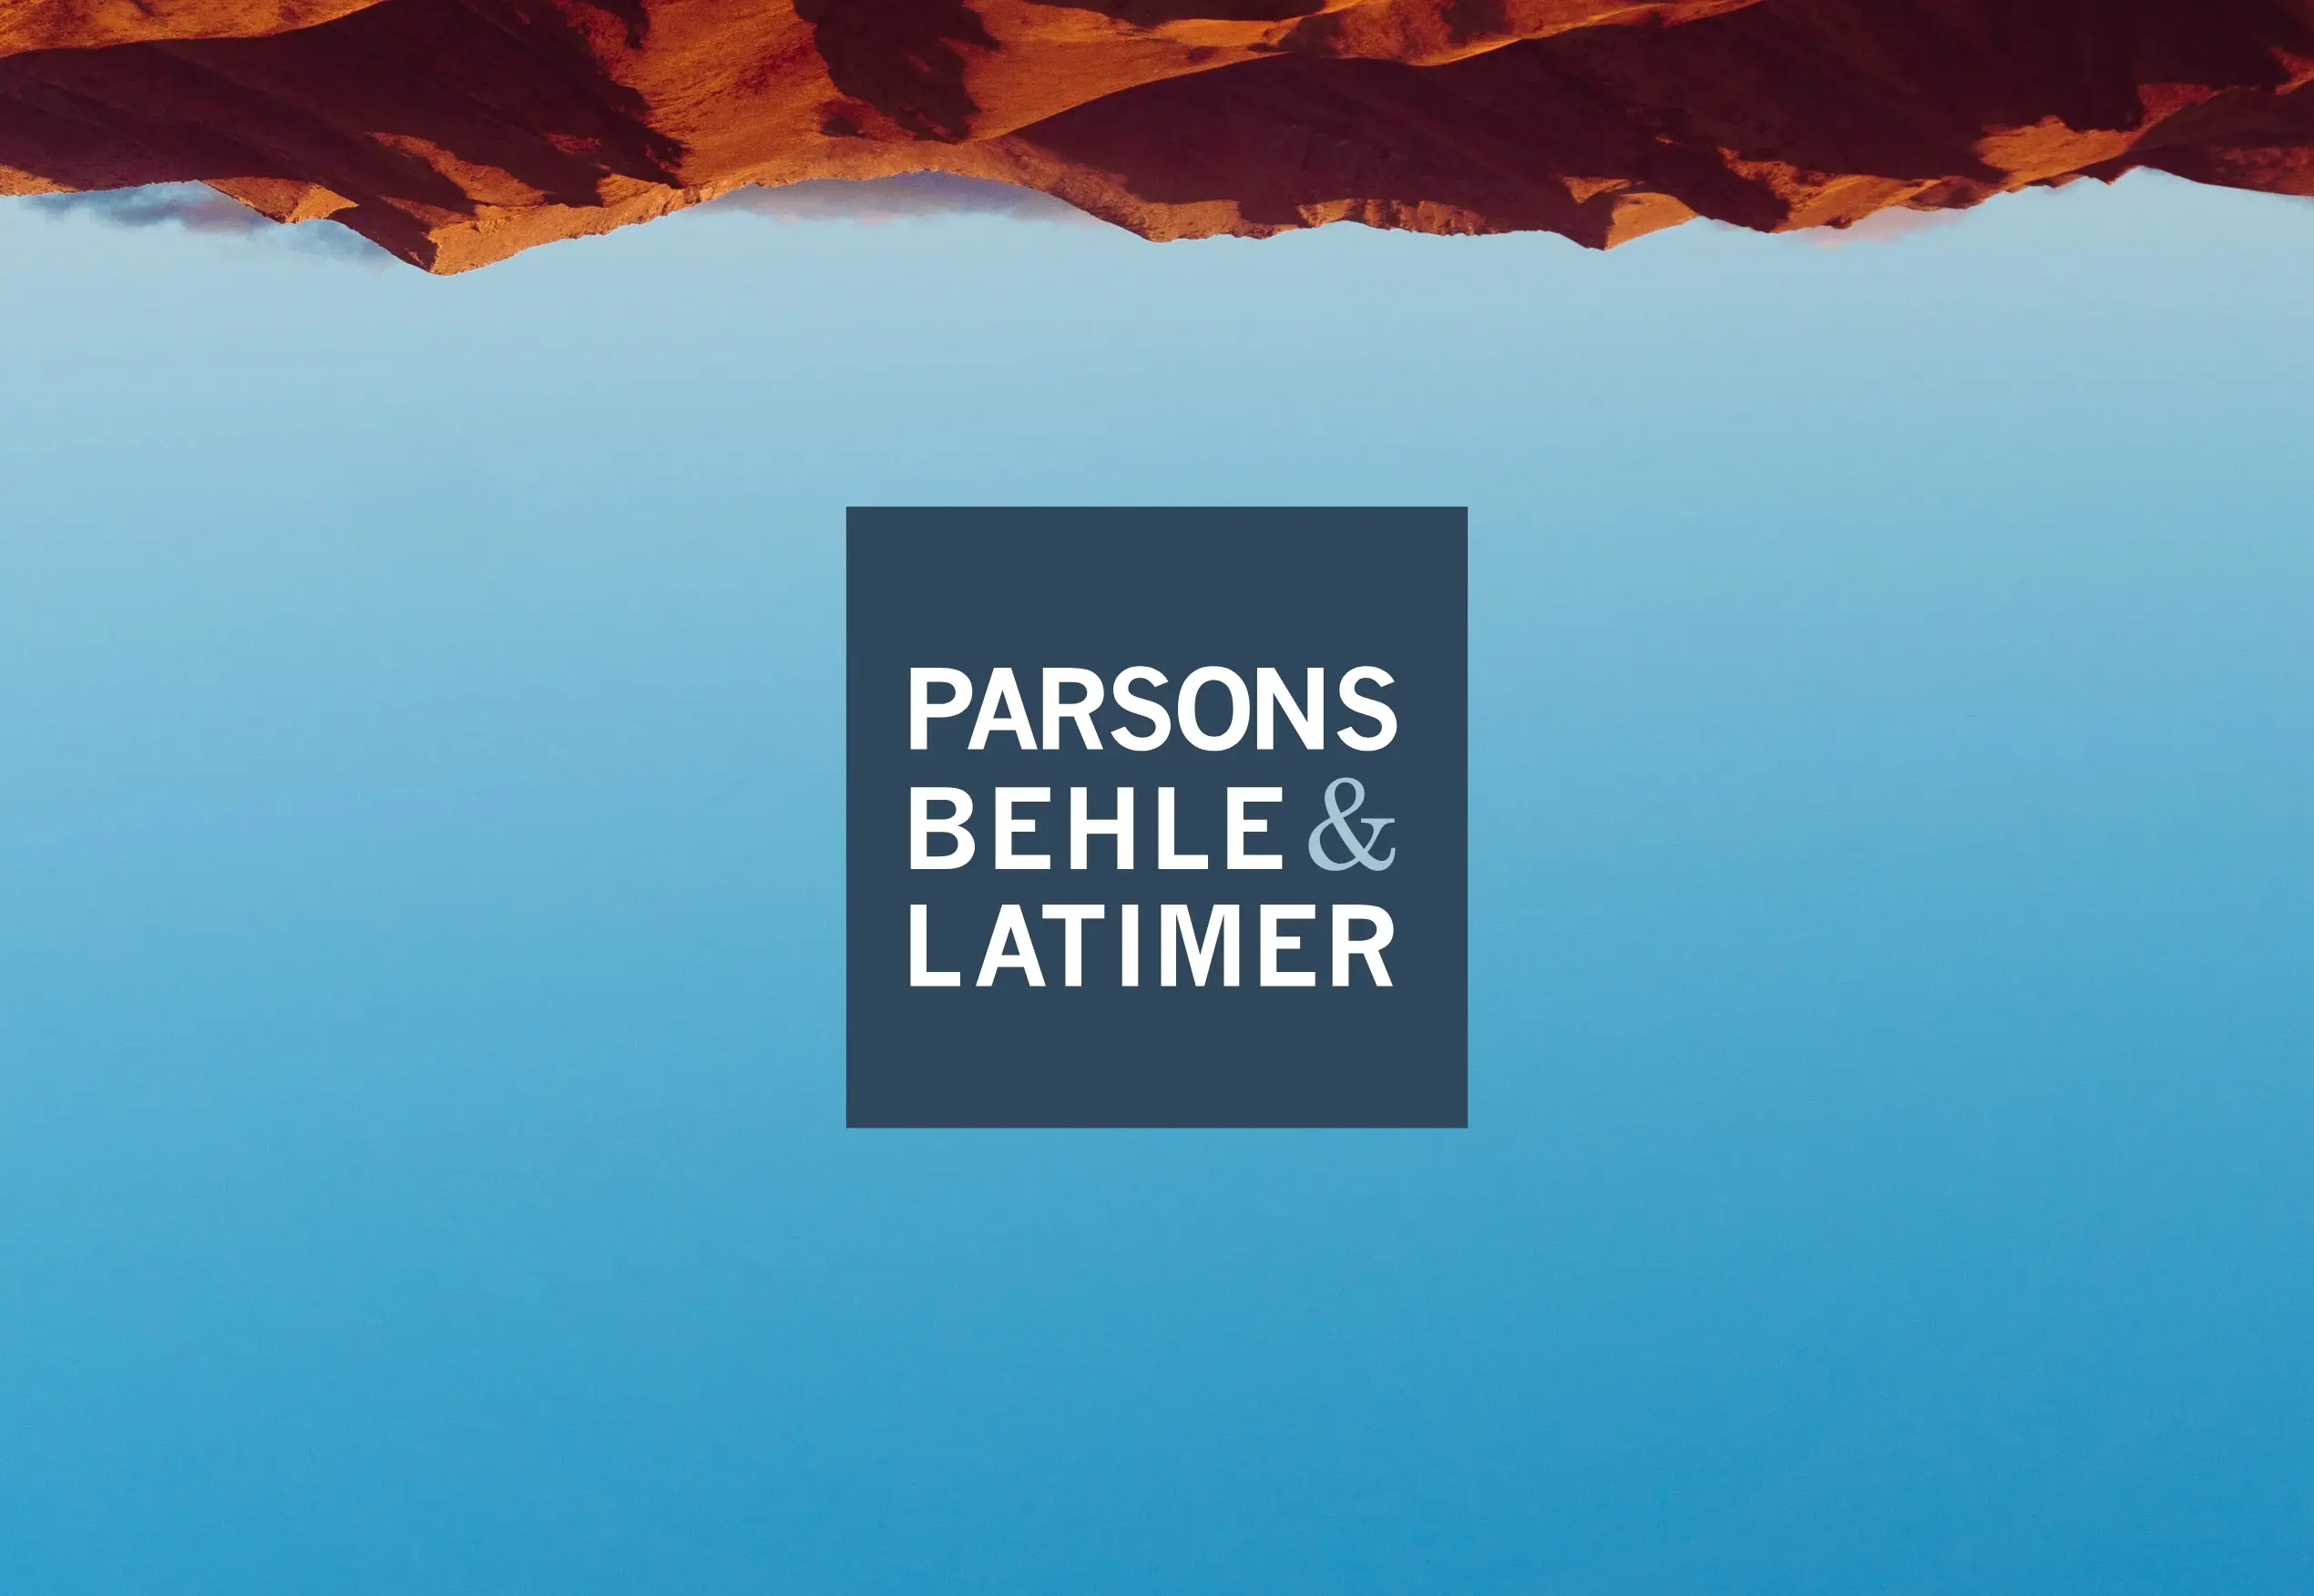 Parsons Behle & Latimer